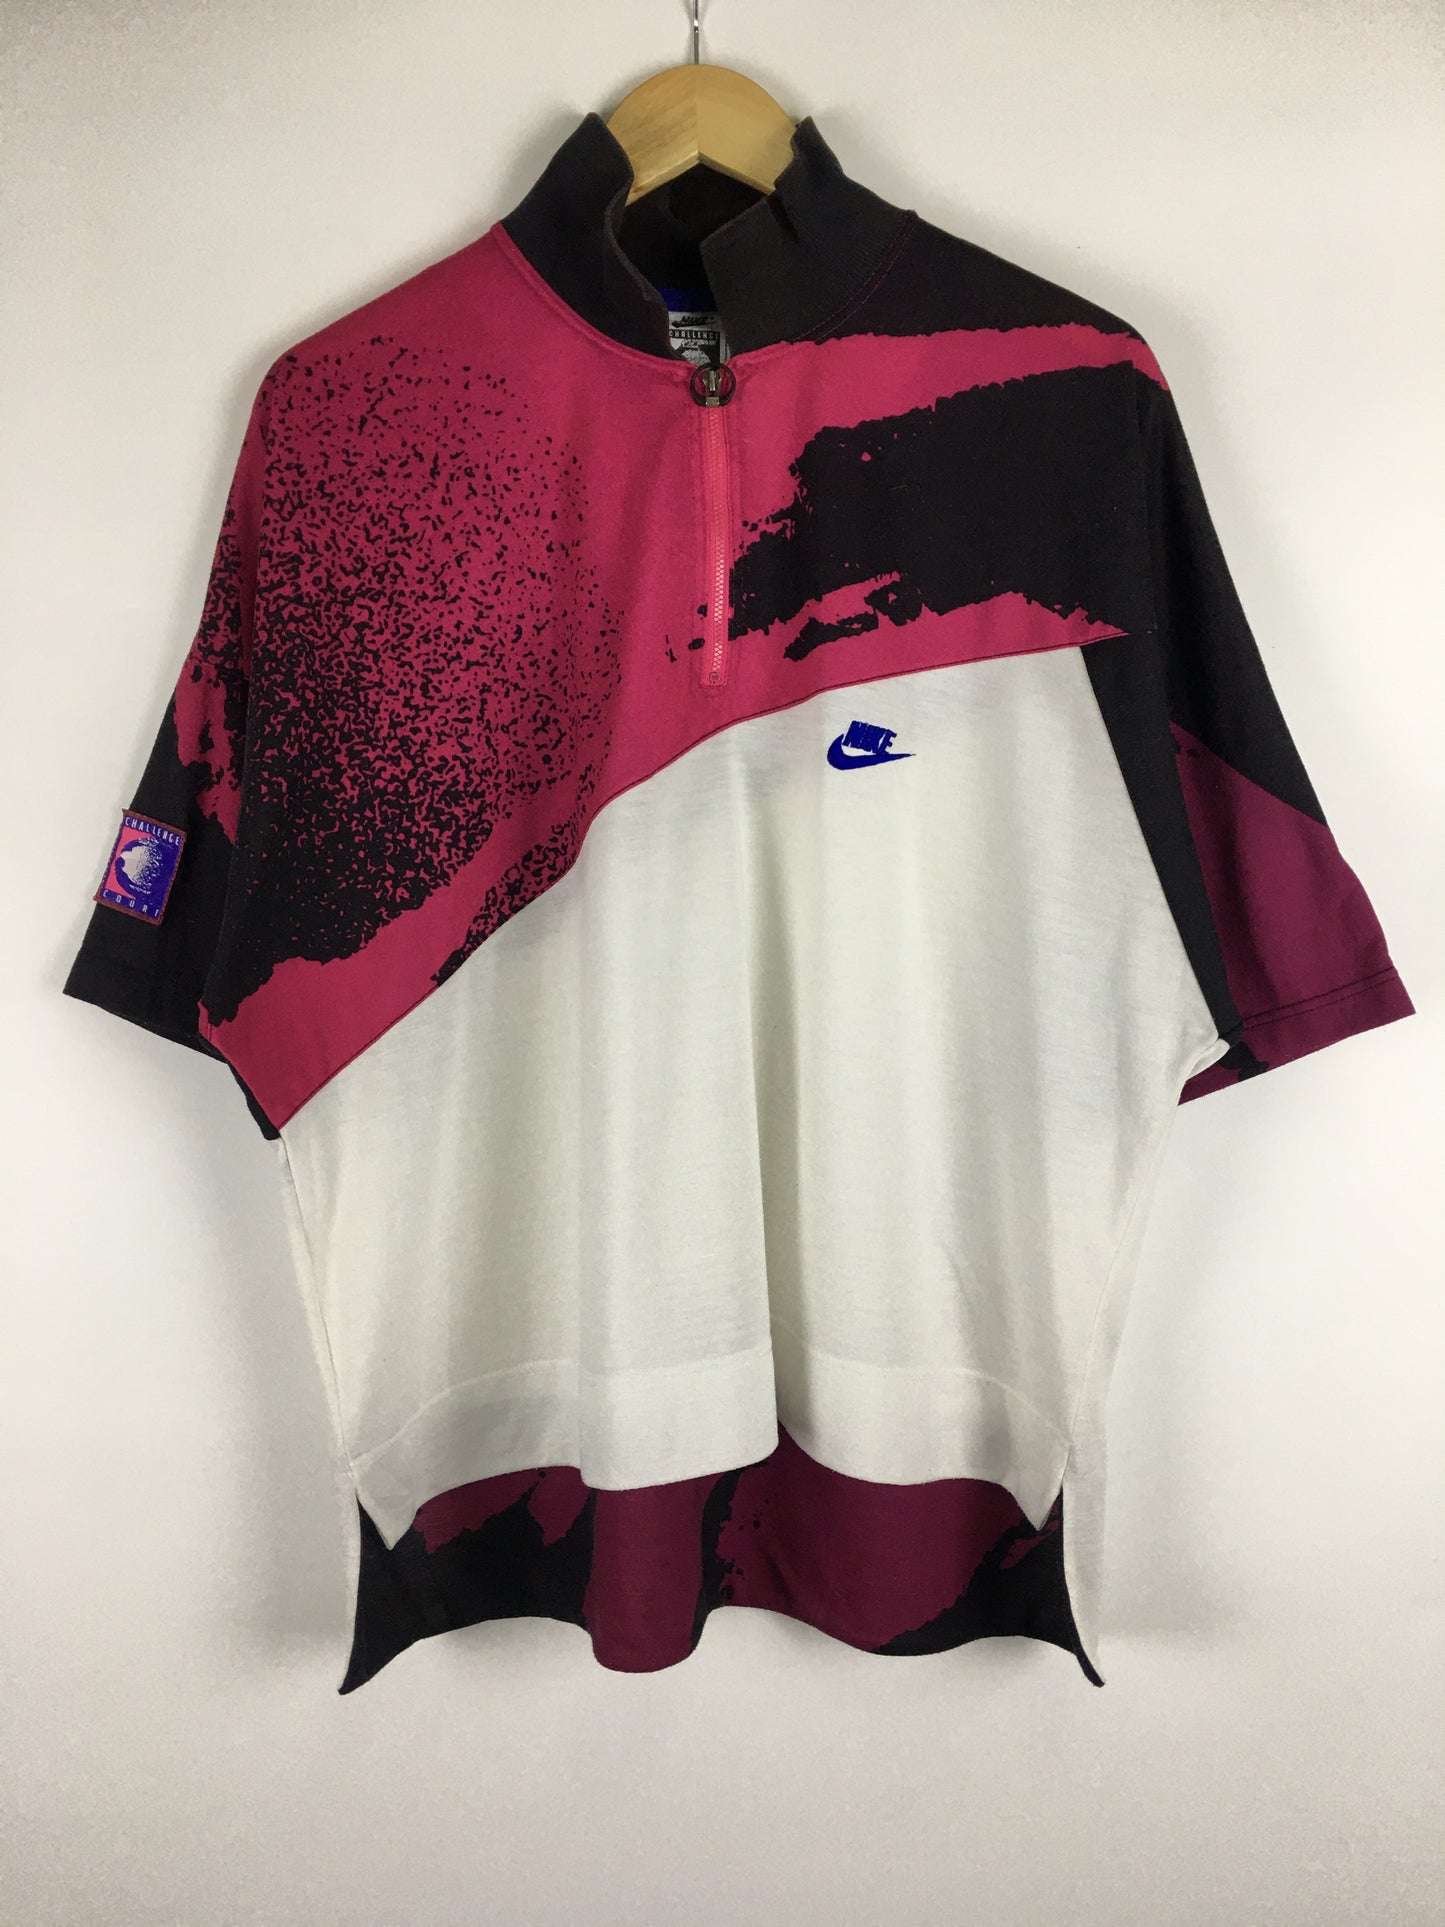 Vintage Nike Challenge Court 90's Polo shirt